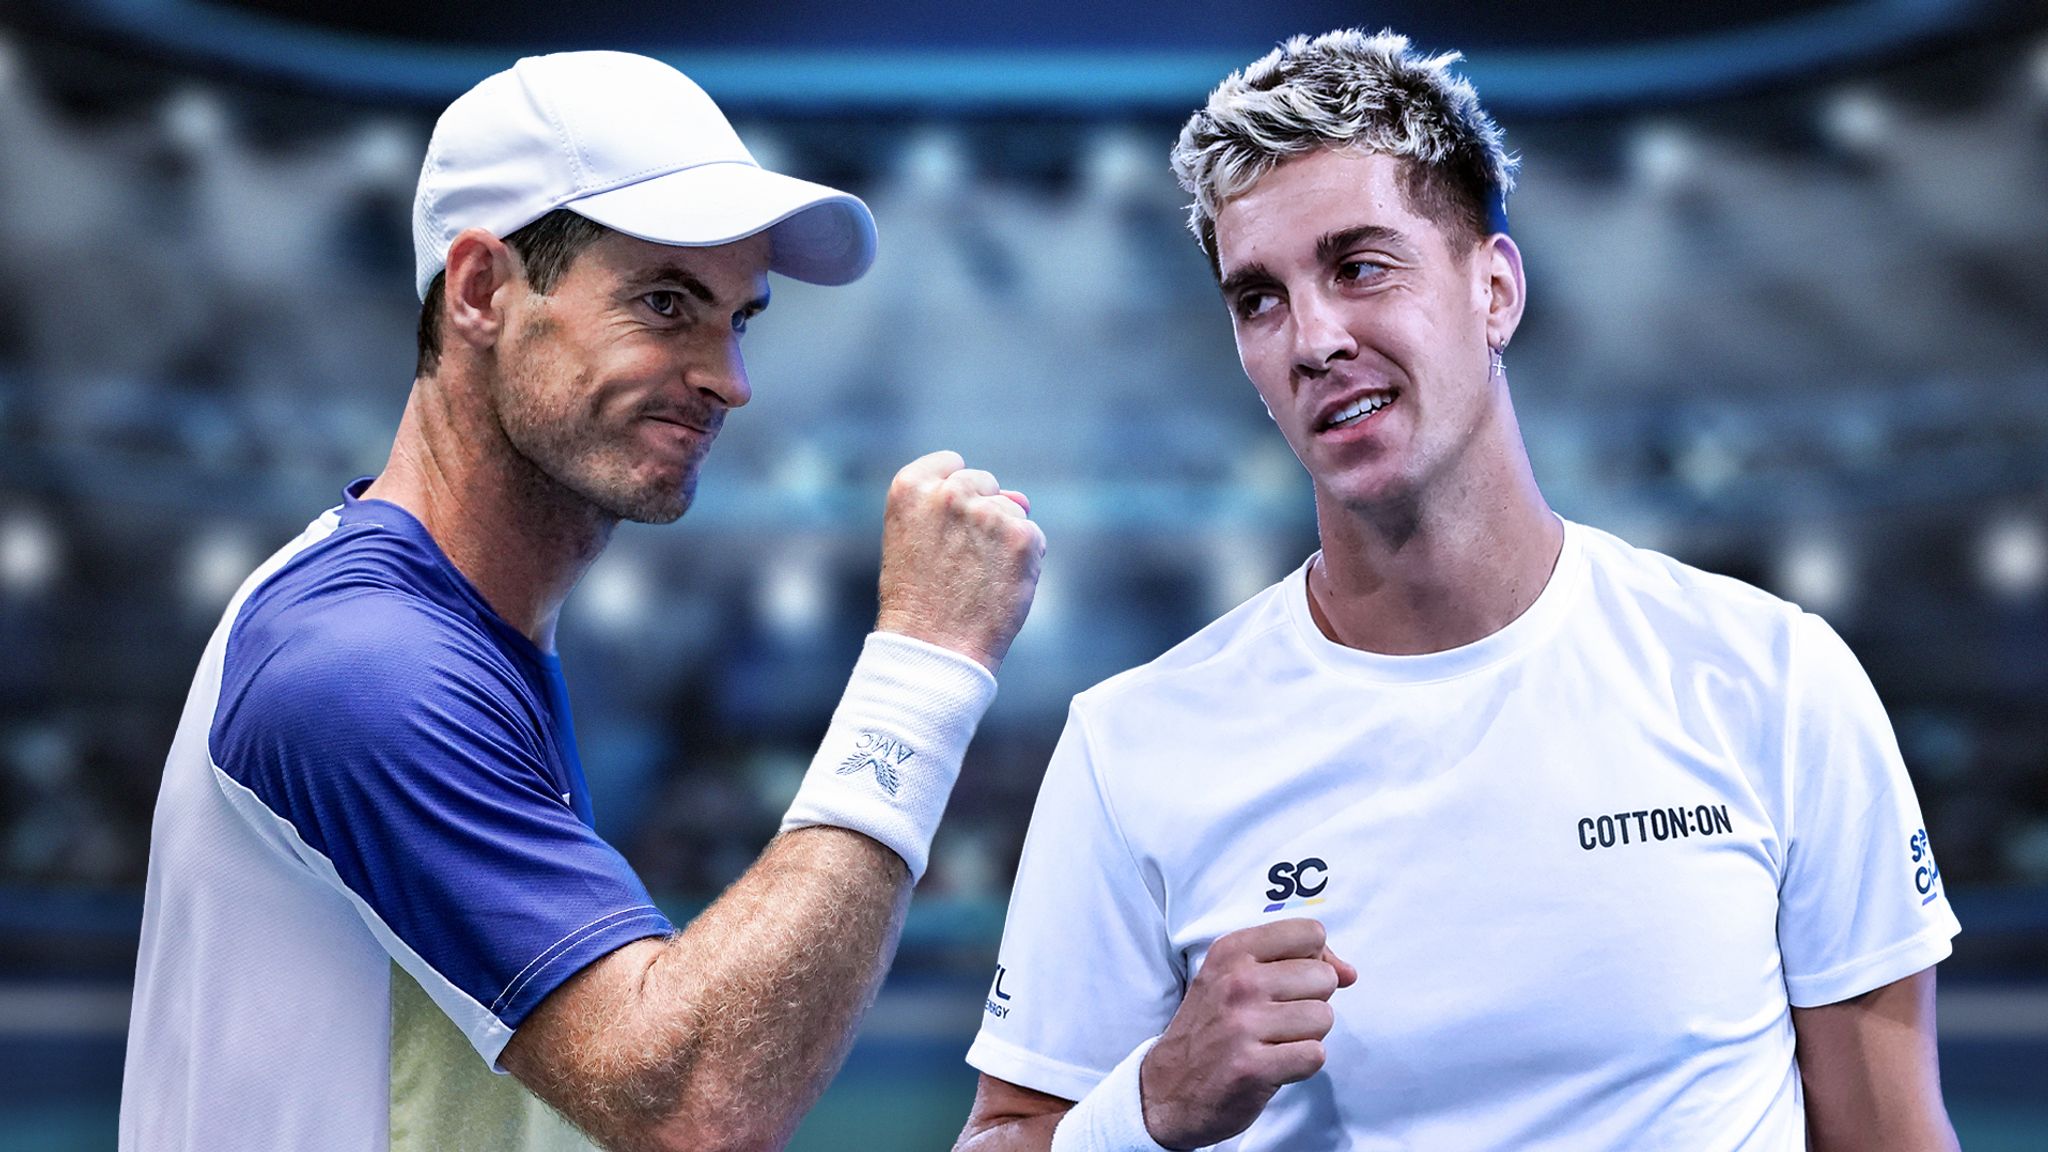 Andy Murray vs Thanasi Kokkinakis Home favourite praises role model opponent ahead of Australian Open meeting Tennis News Sky Sports